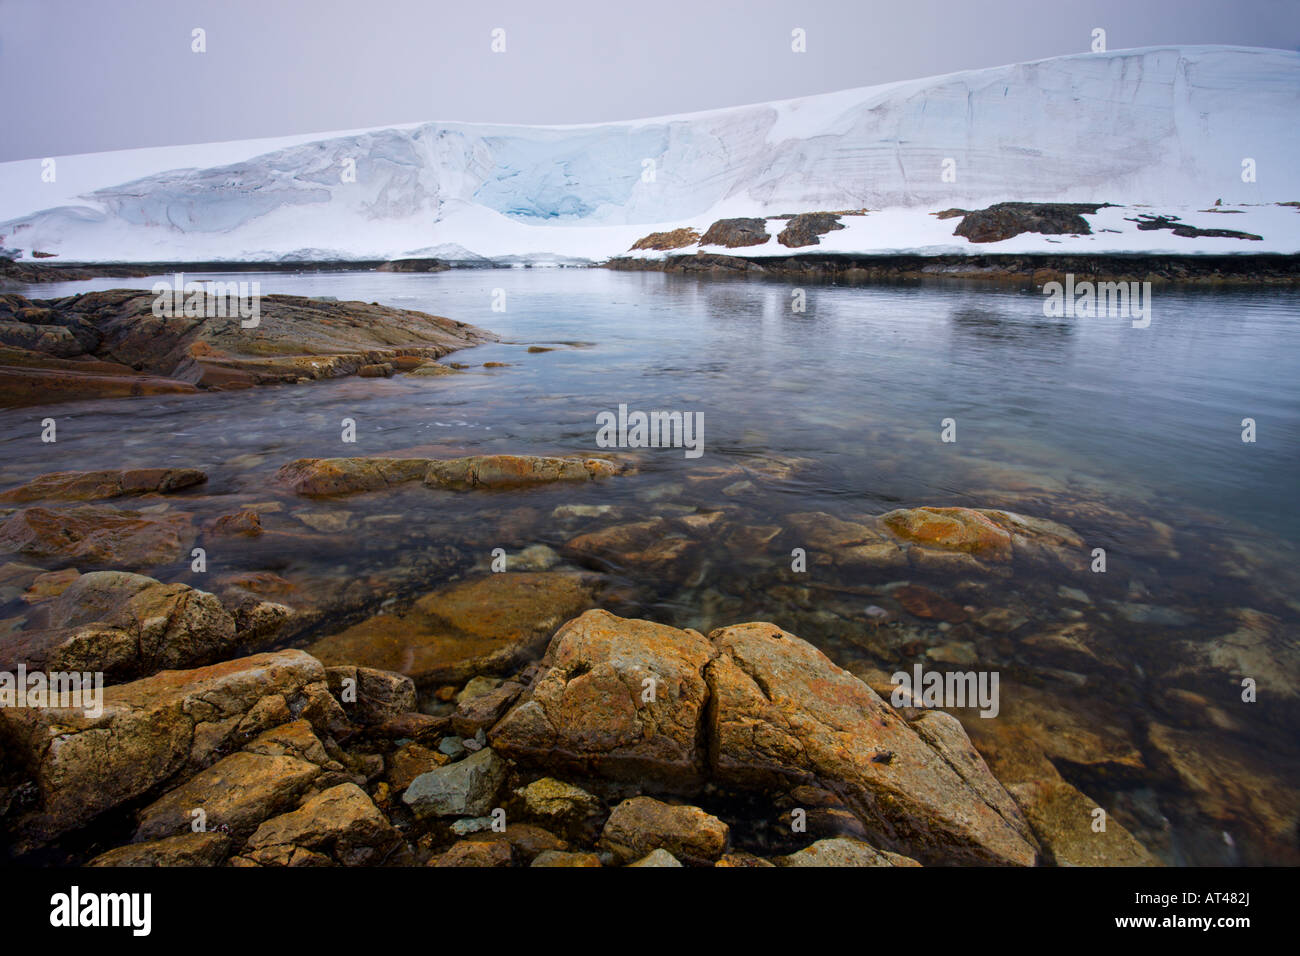 Dicken Eisdecke auf White Island, Antarktis Stockfoto